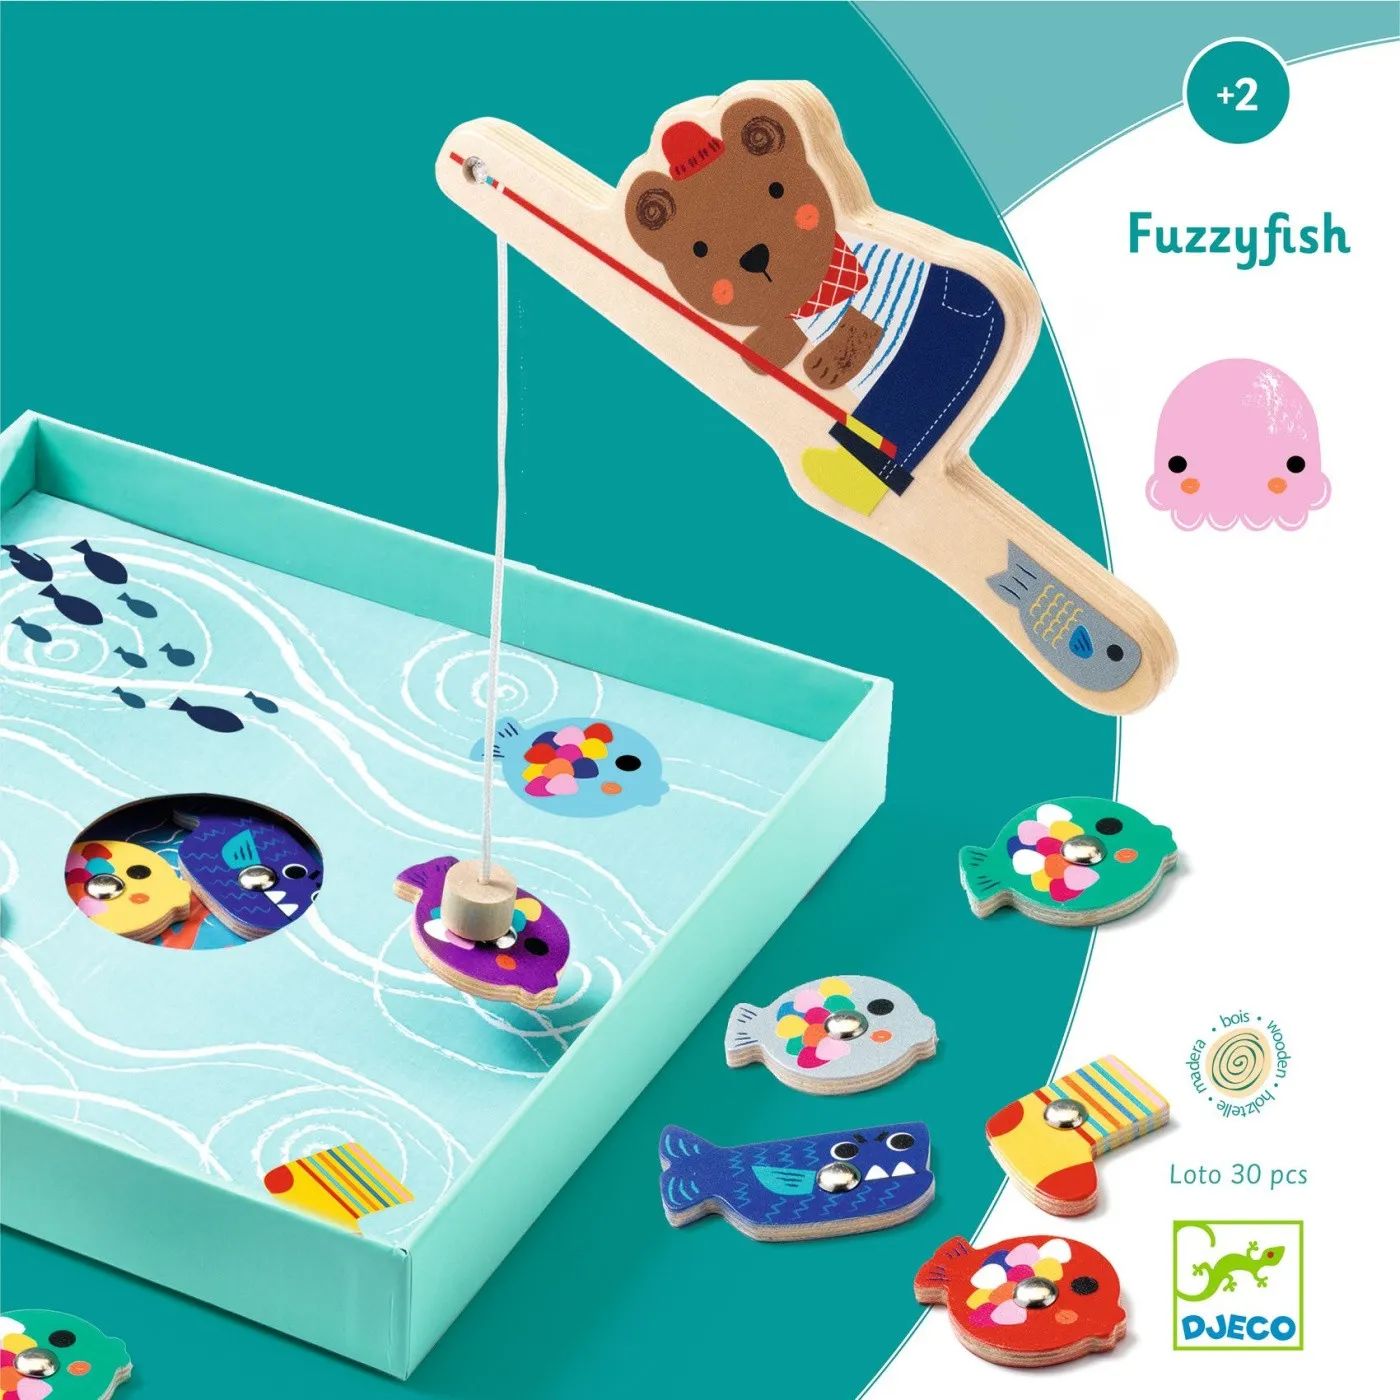 Levně Djeco Educationnal wooden games Fuzzyfish